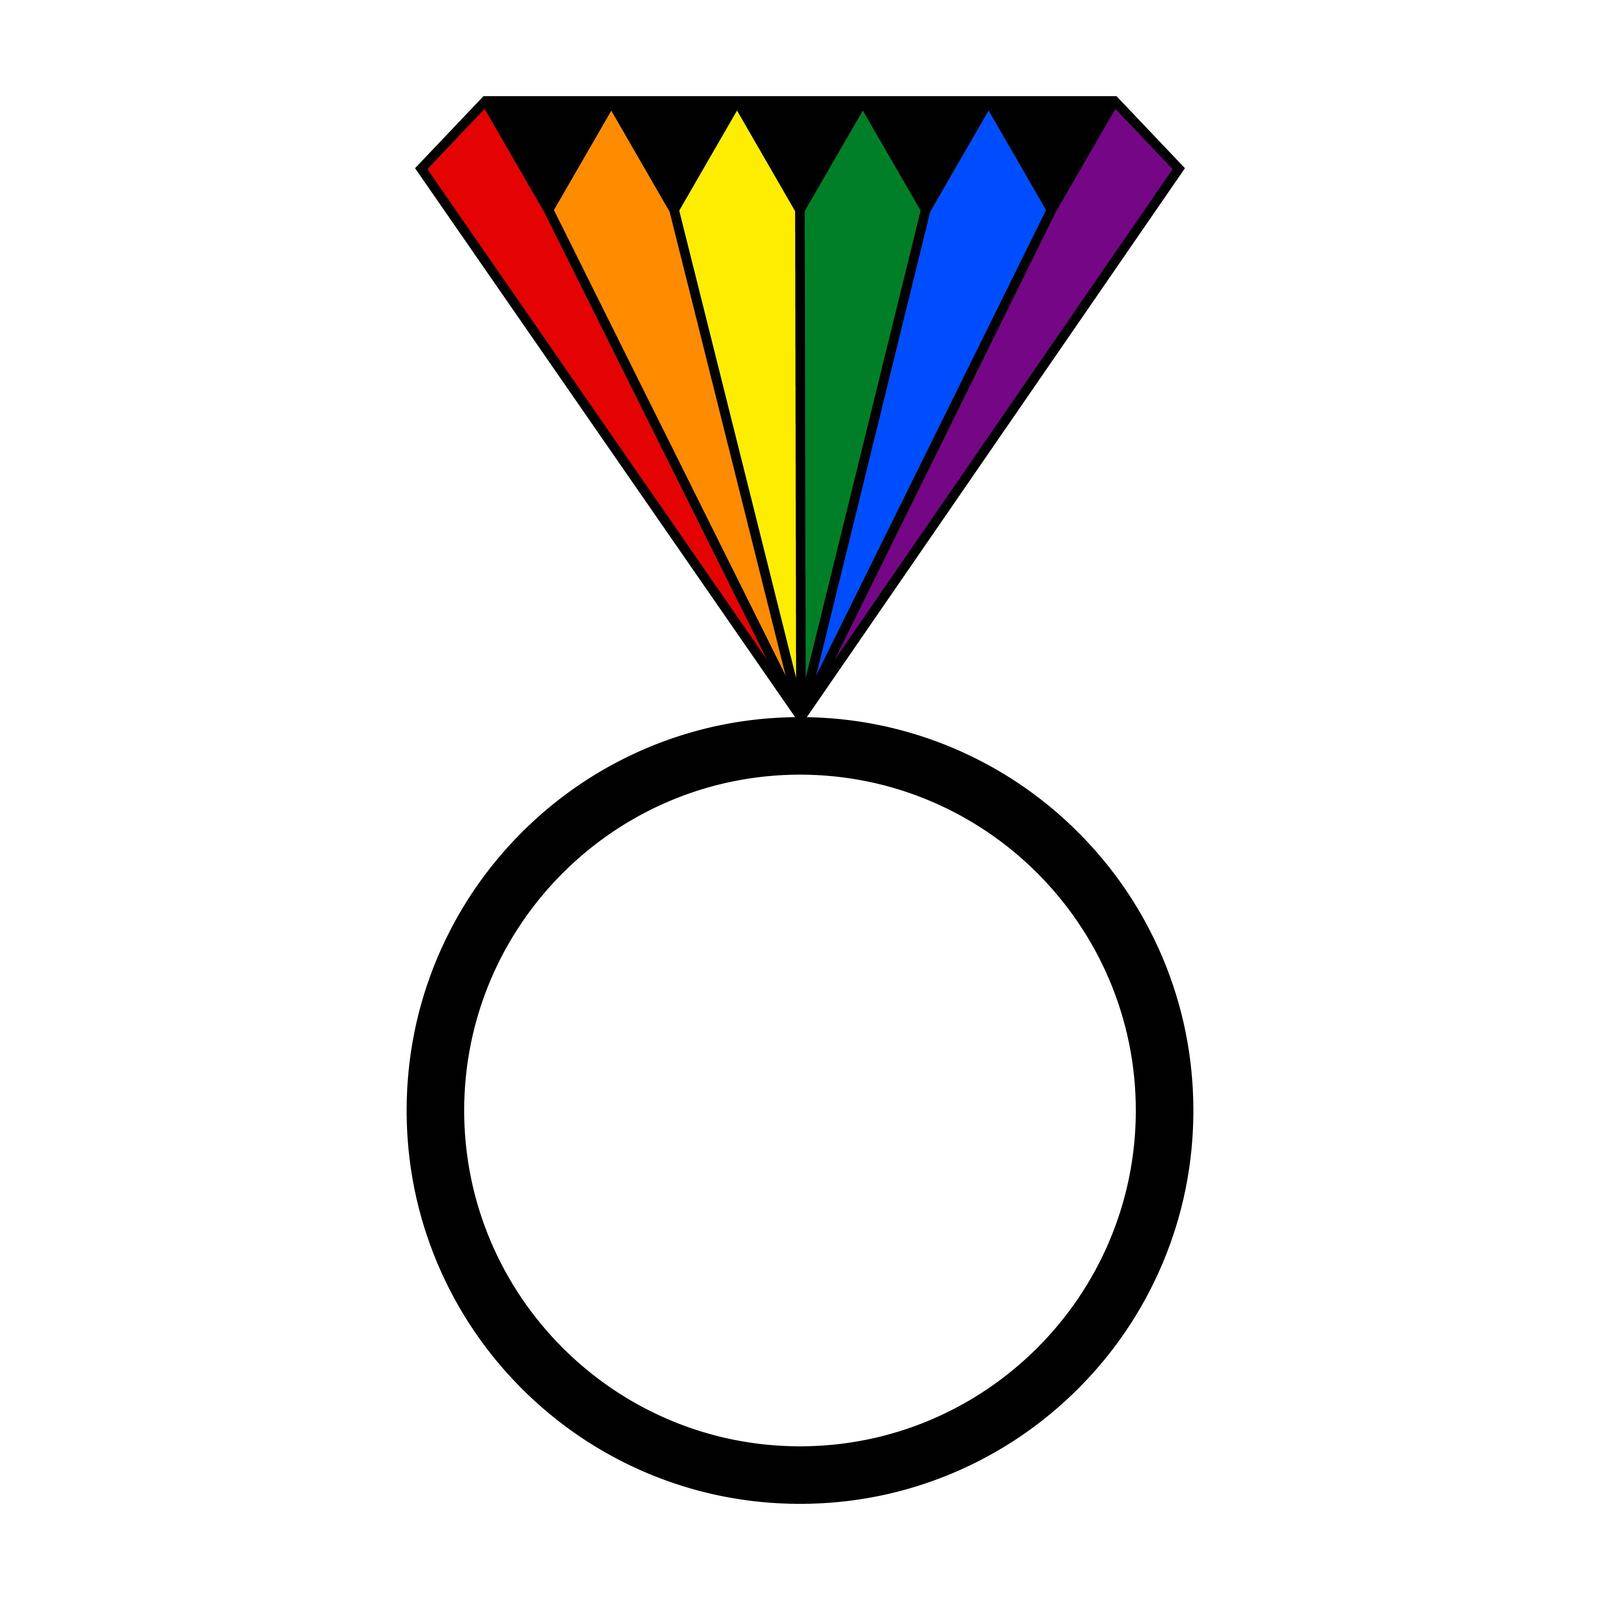 Ring with LGBT flag pictogram vector illustration. by vas_evg